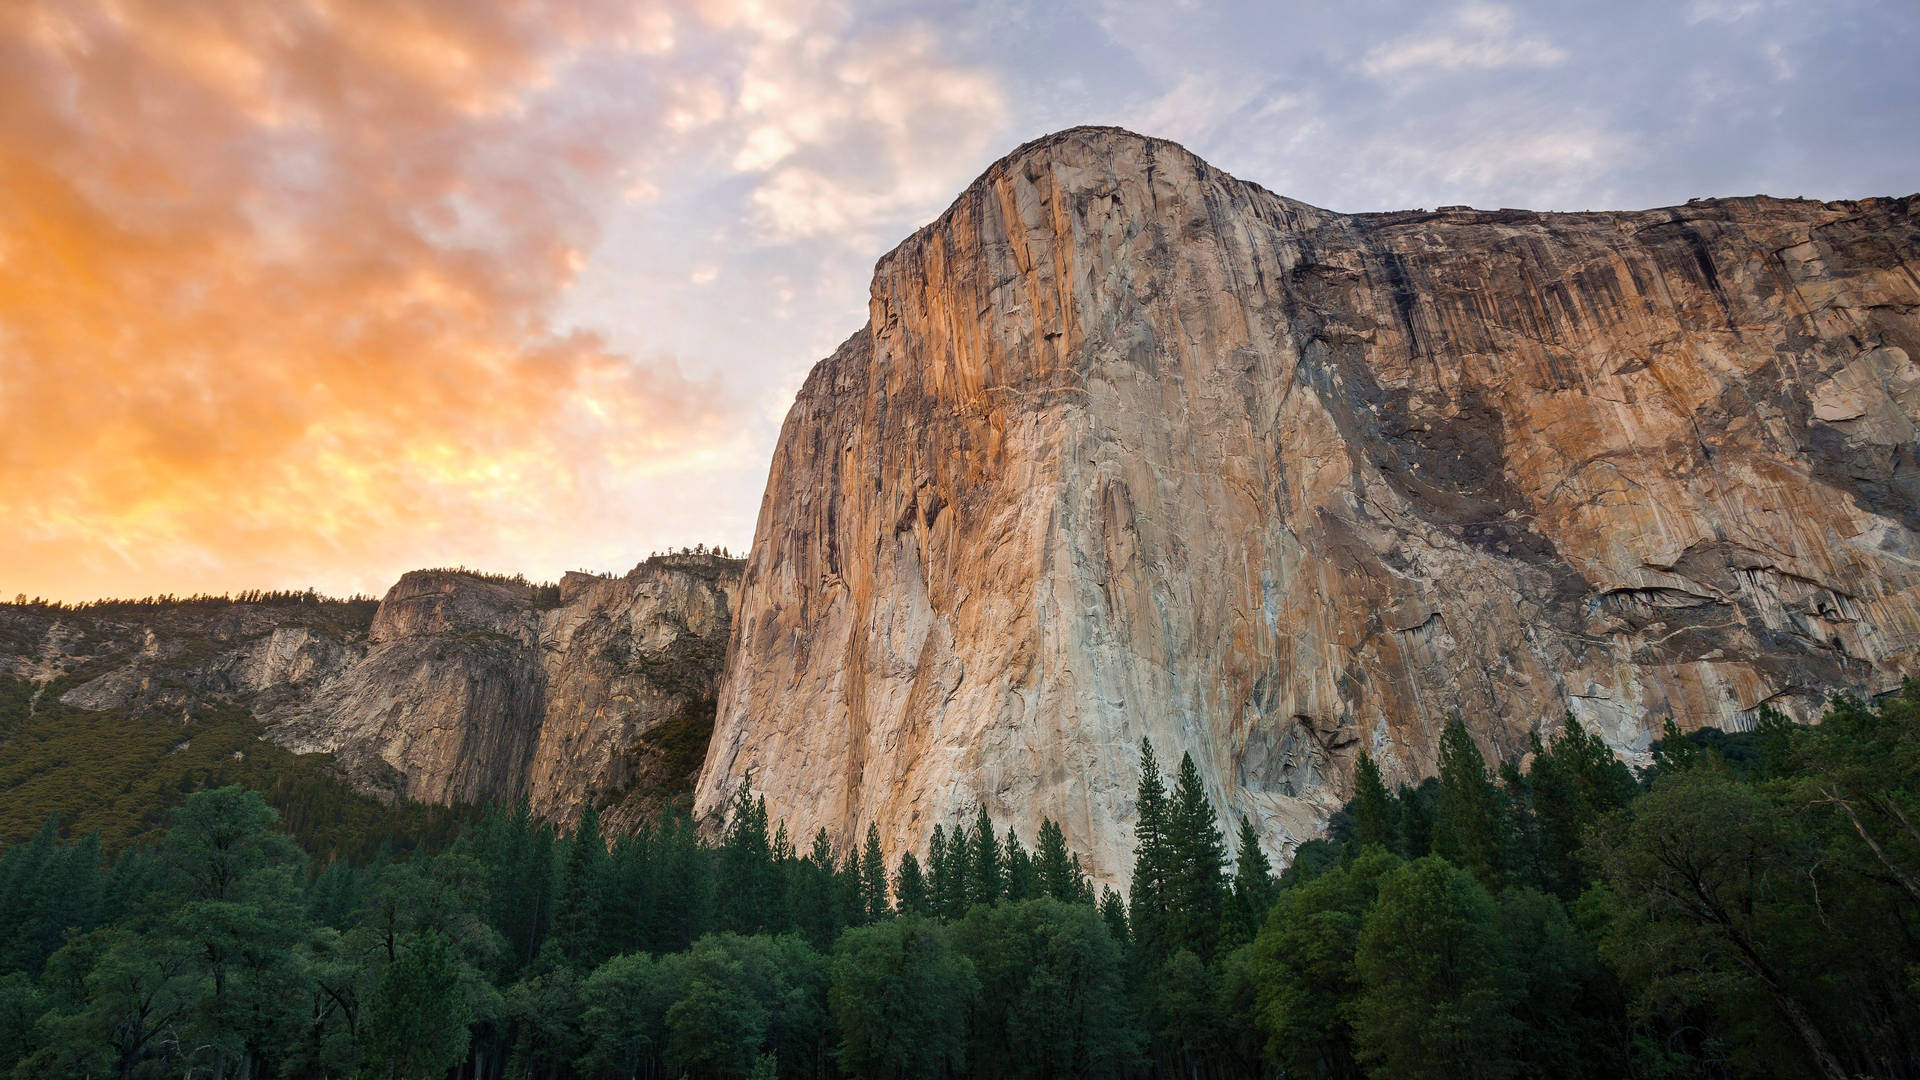 Yosemite 5013X2820 Wallpaper and Background Image